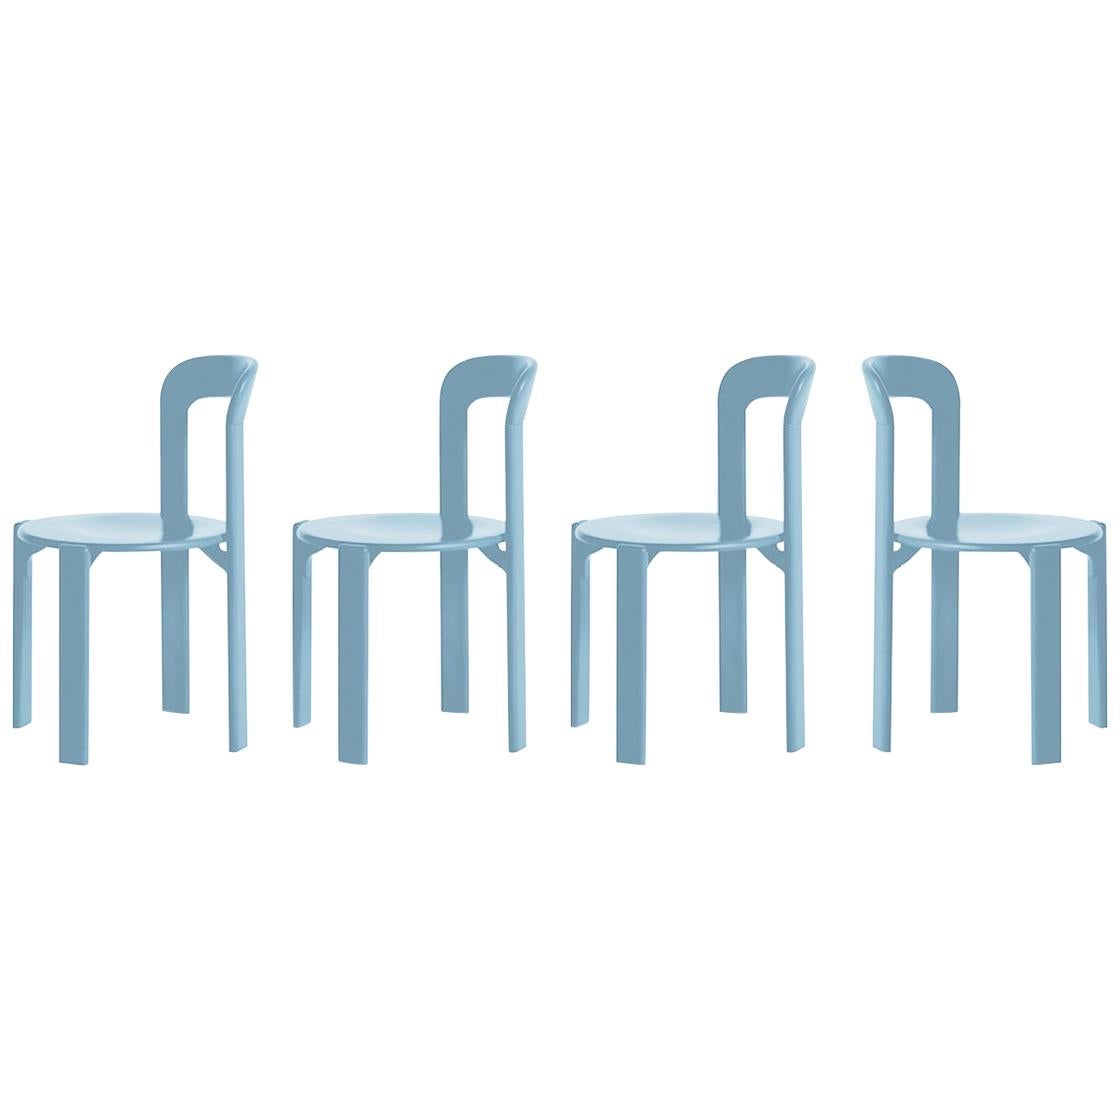 Set of 4 Arik Levy FL2 Blue Rey Chairs by Dietiker, a Swiss Icon Since 1971